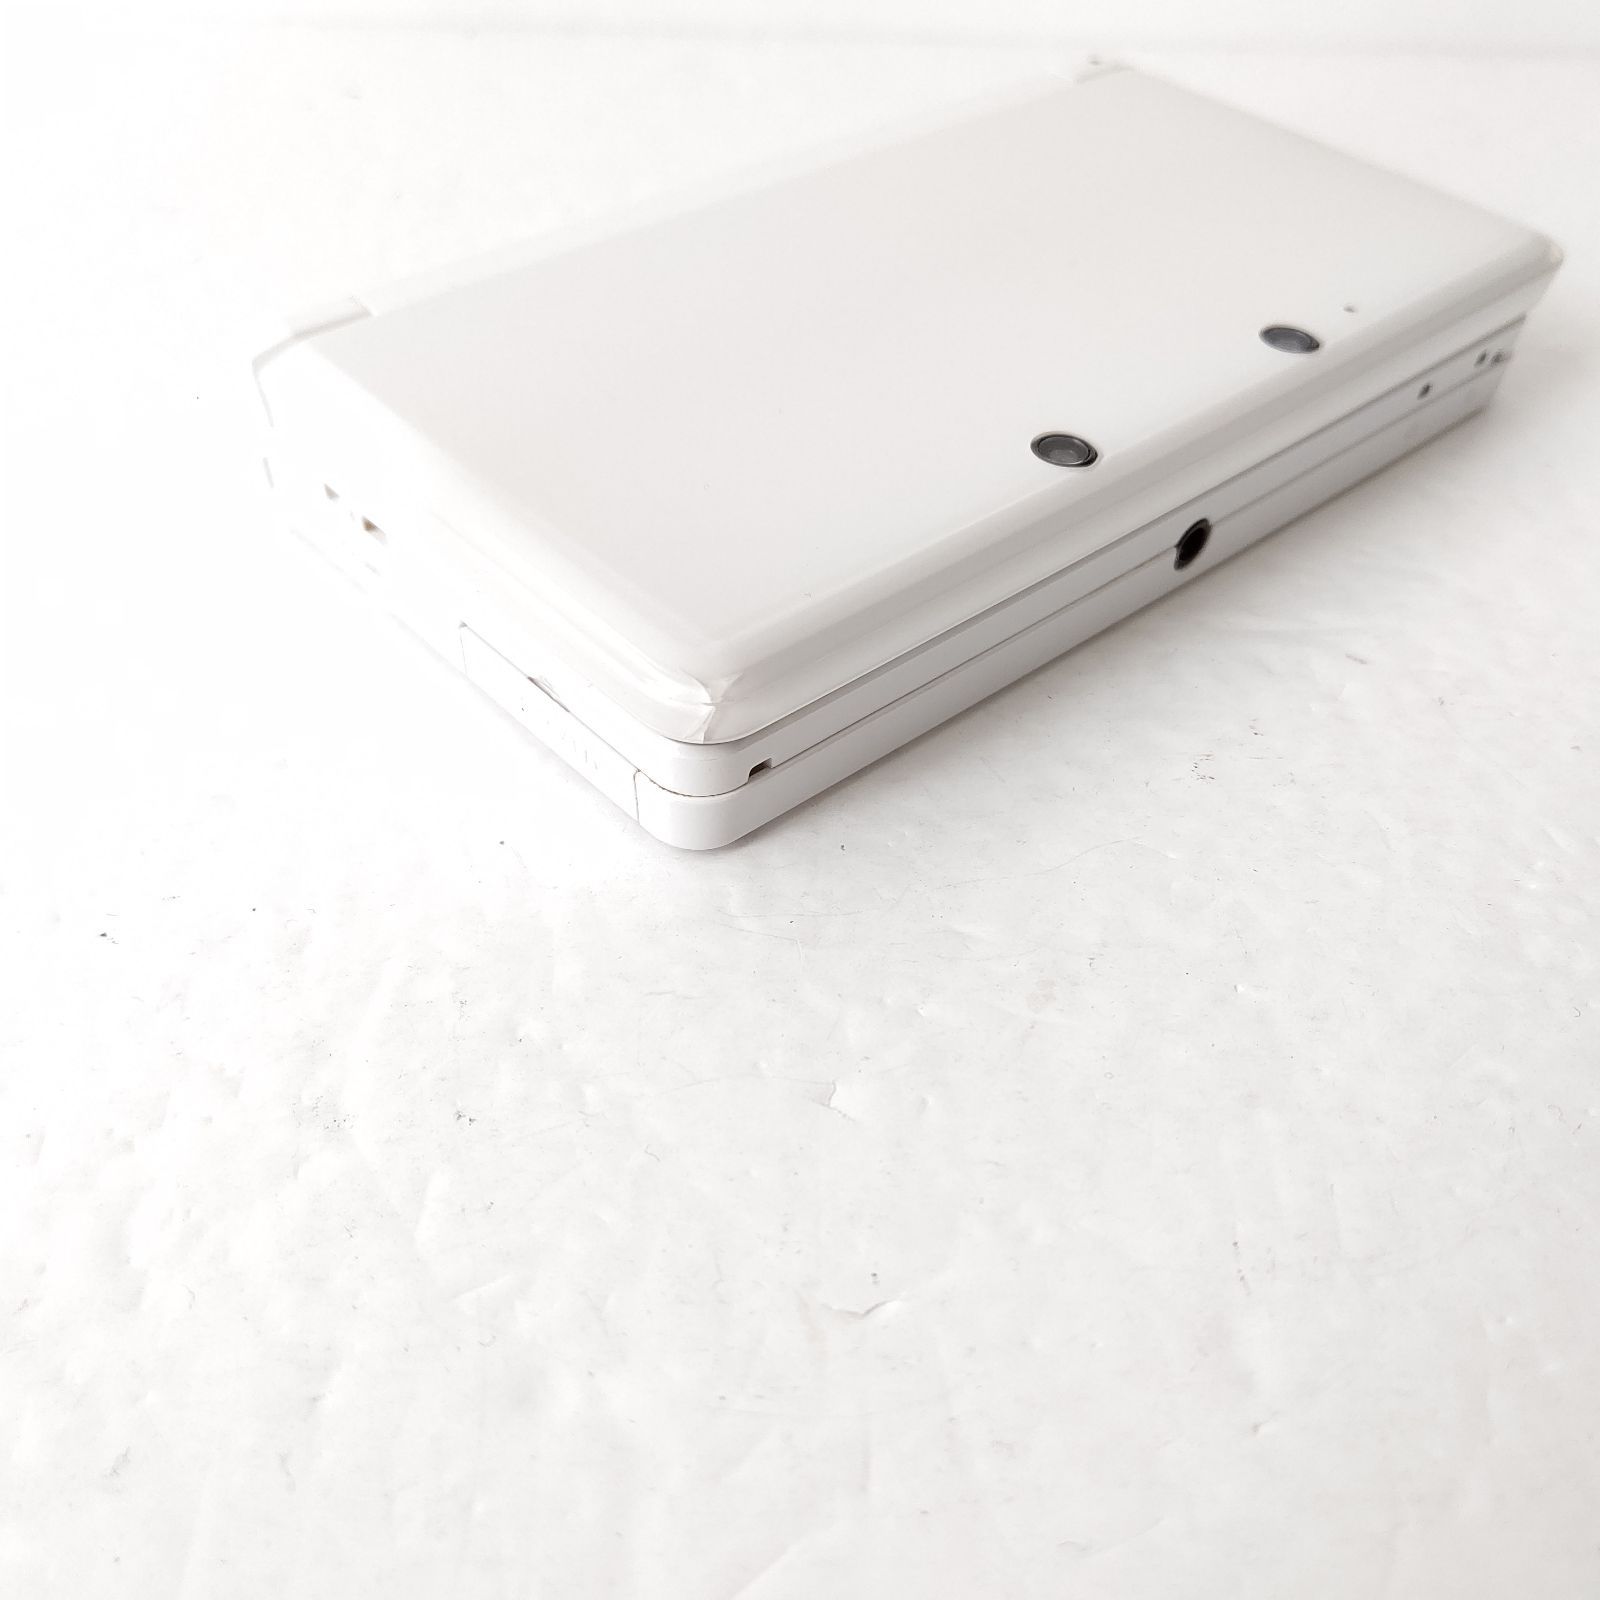 Nintendo ニンテンドー3DS アイスホワイト 画面極美品 任天堂 ゲーム機